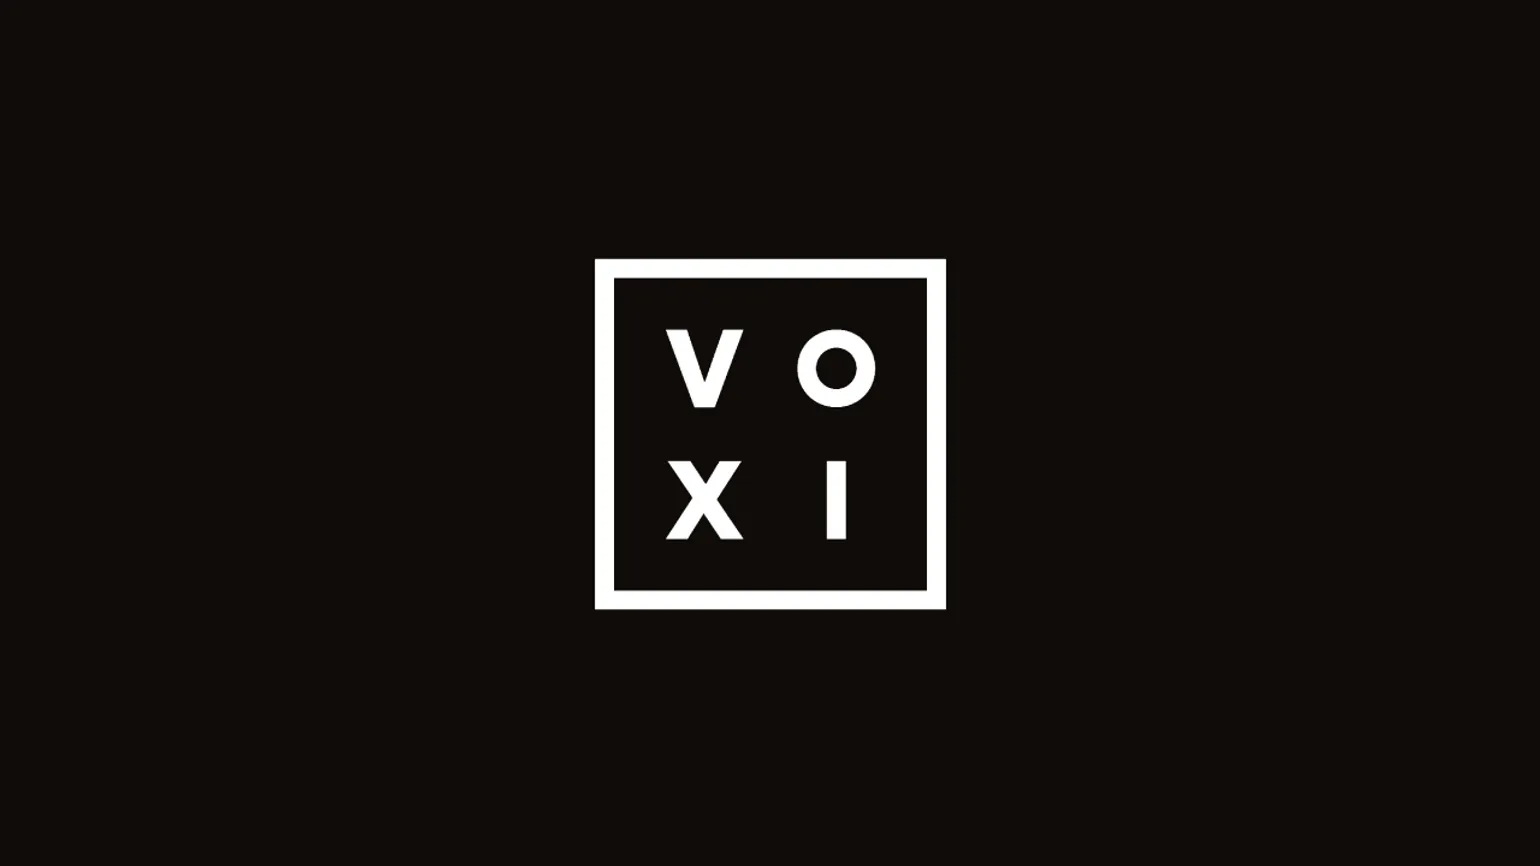 VOXI roaming - International roaming with VOXI explained